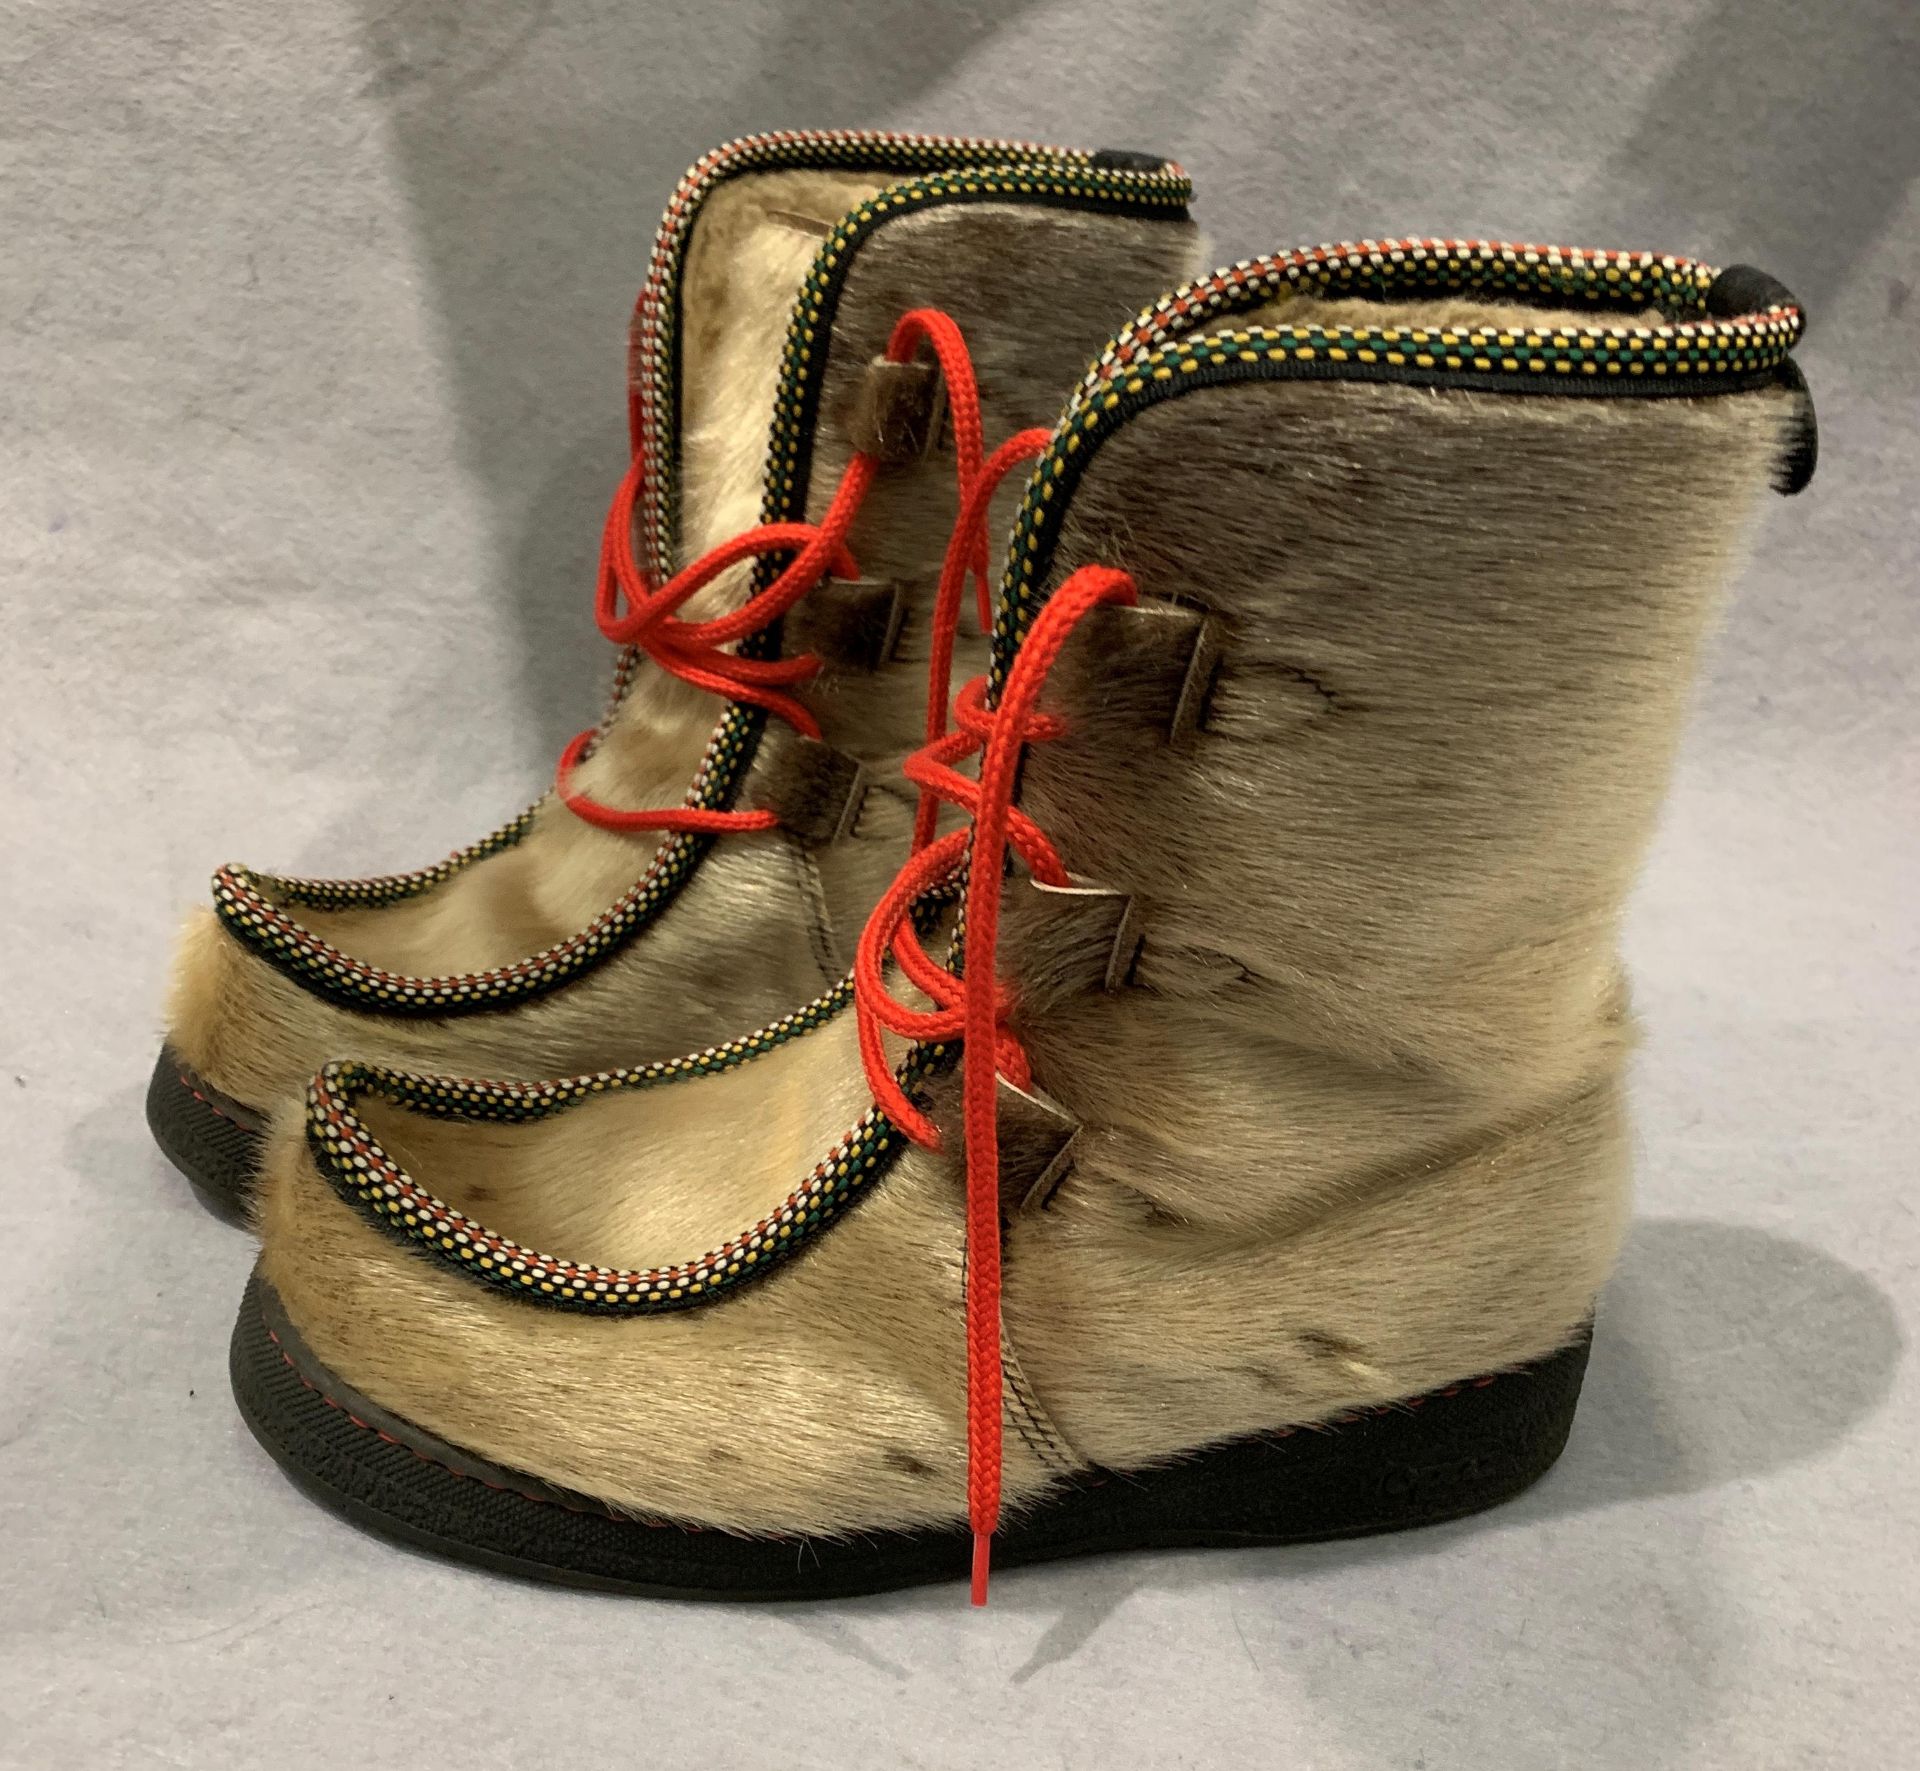 Topaz reindeer/eskimo style boots,